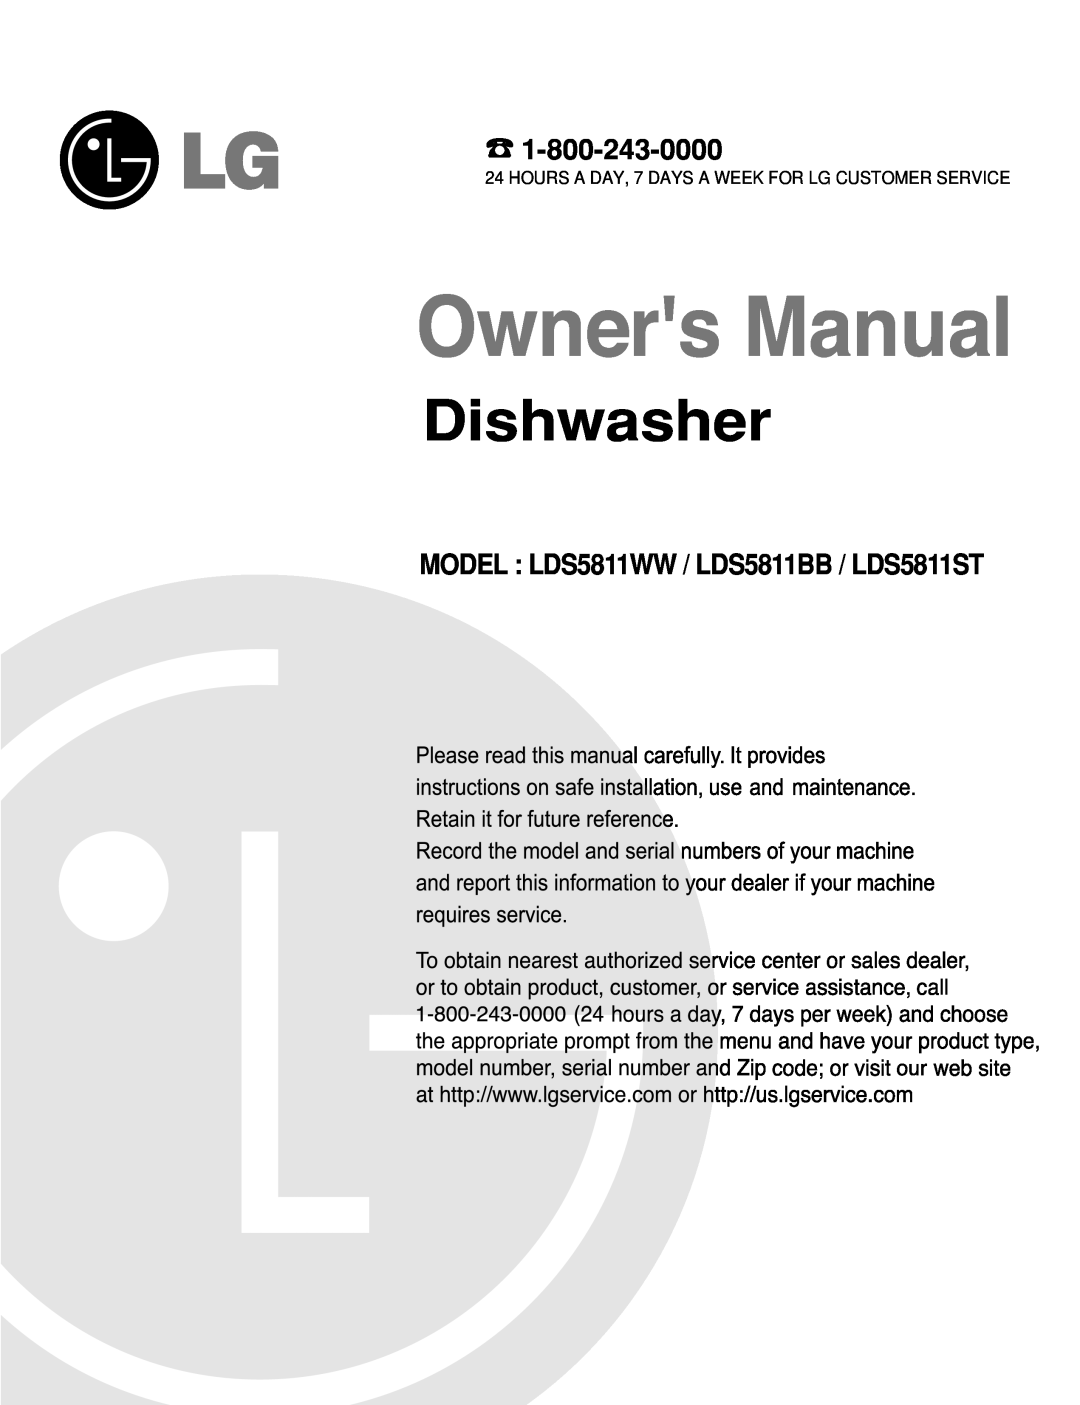 LG Electronics manual MODEL LDS5811WW / LDS5811BB / LDS5811ST, Dishwasher 